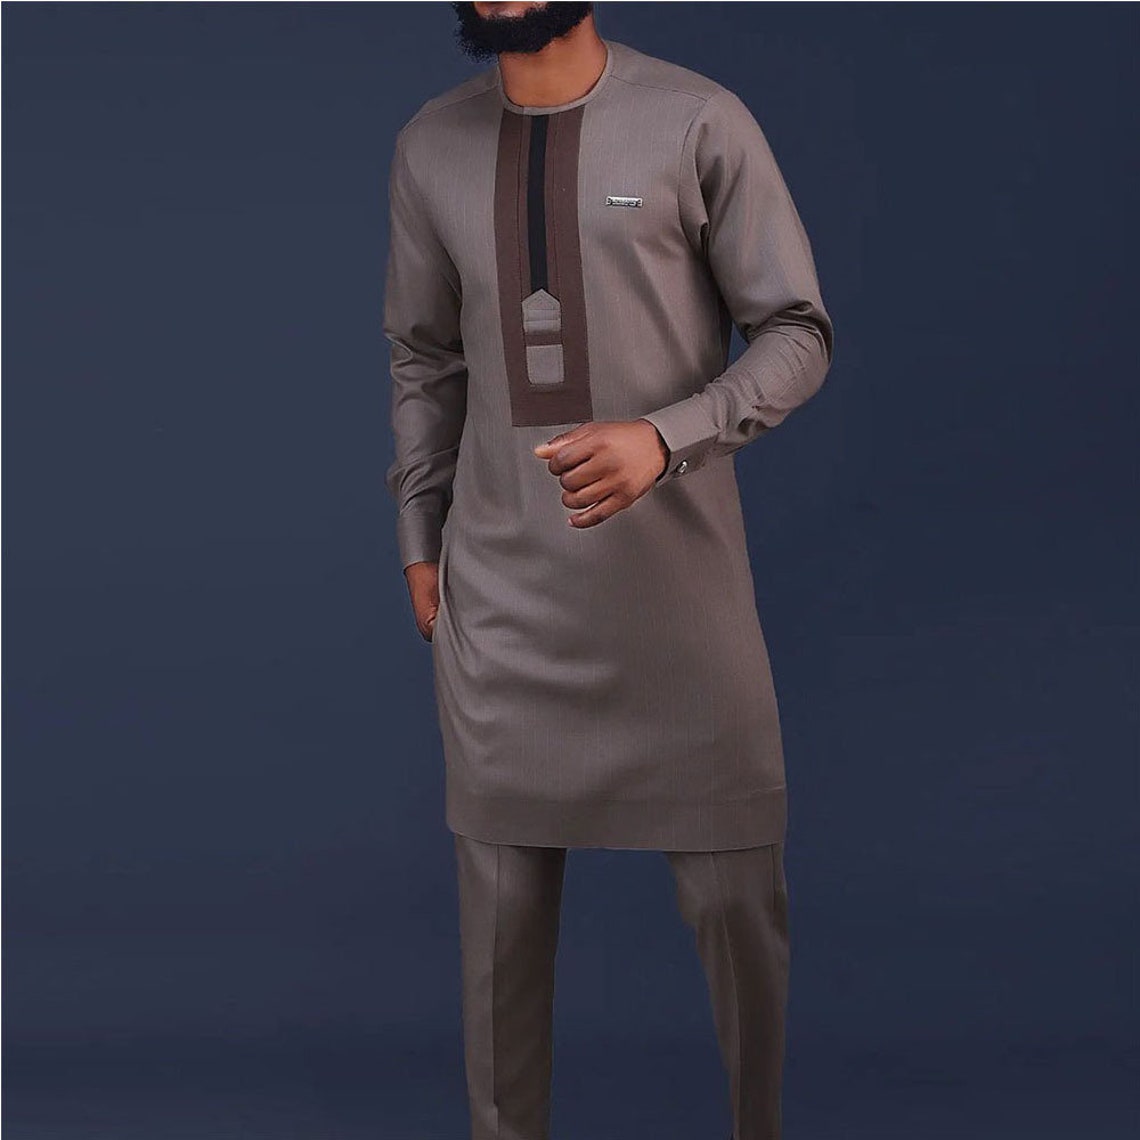 Arabian Men's Suit 2 Piece African Colorblock Long Sleeve - Etsy